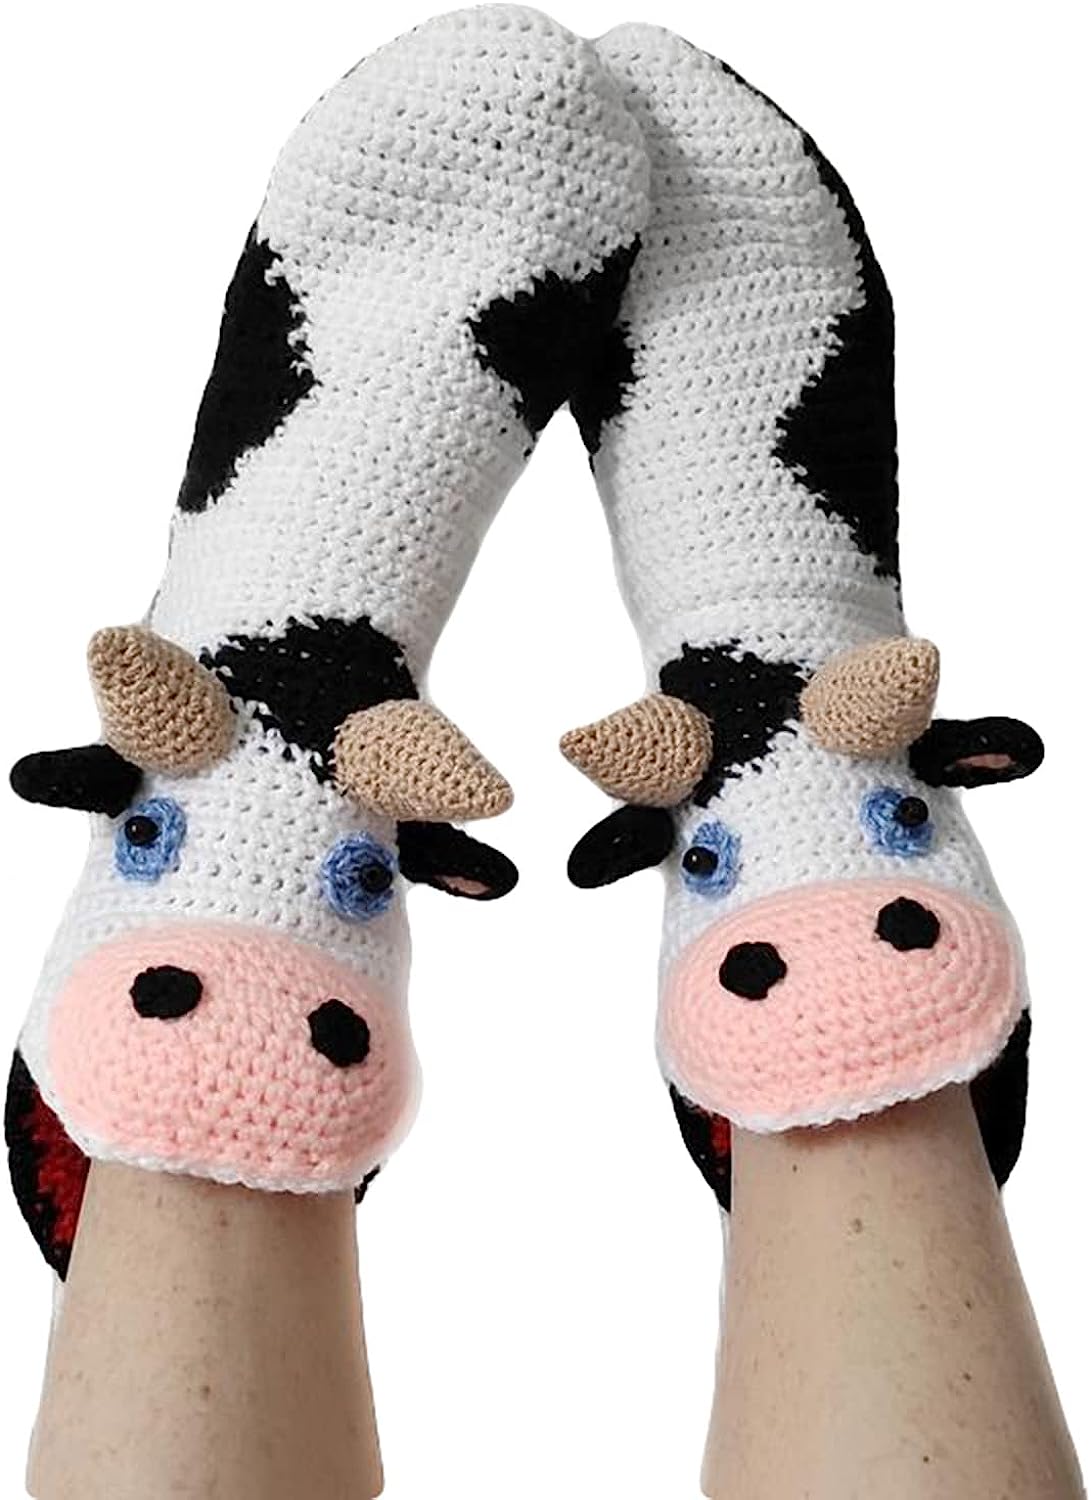 THATLILSHOP One Size / Cows Women Men Novelty Animal Pattern Socks Crazy Funny Knit Crocodile Socks Funny Gifts